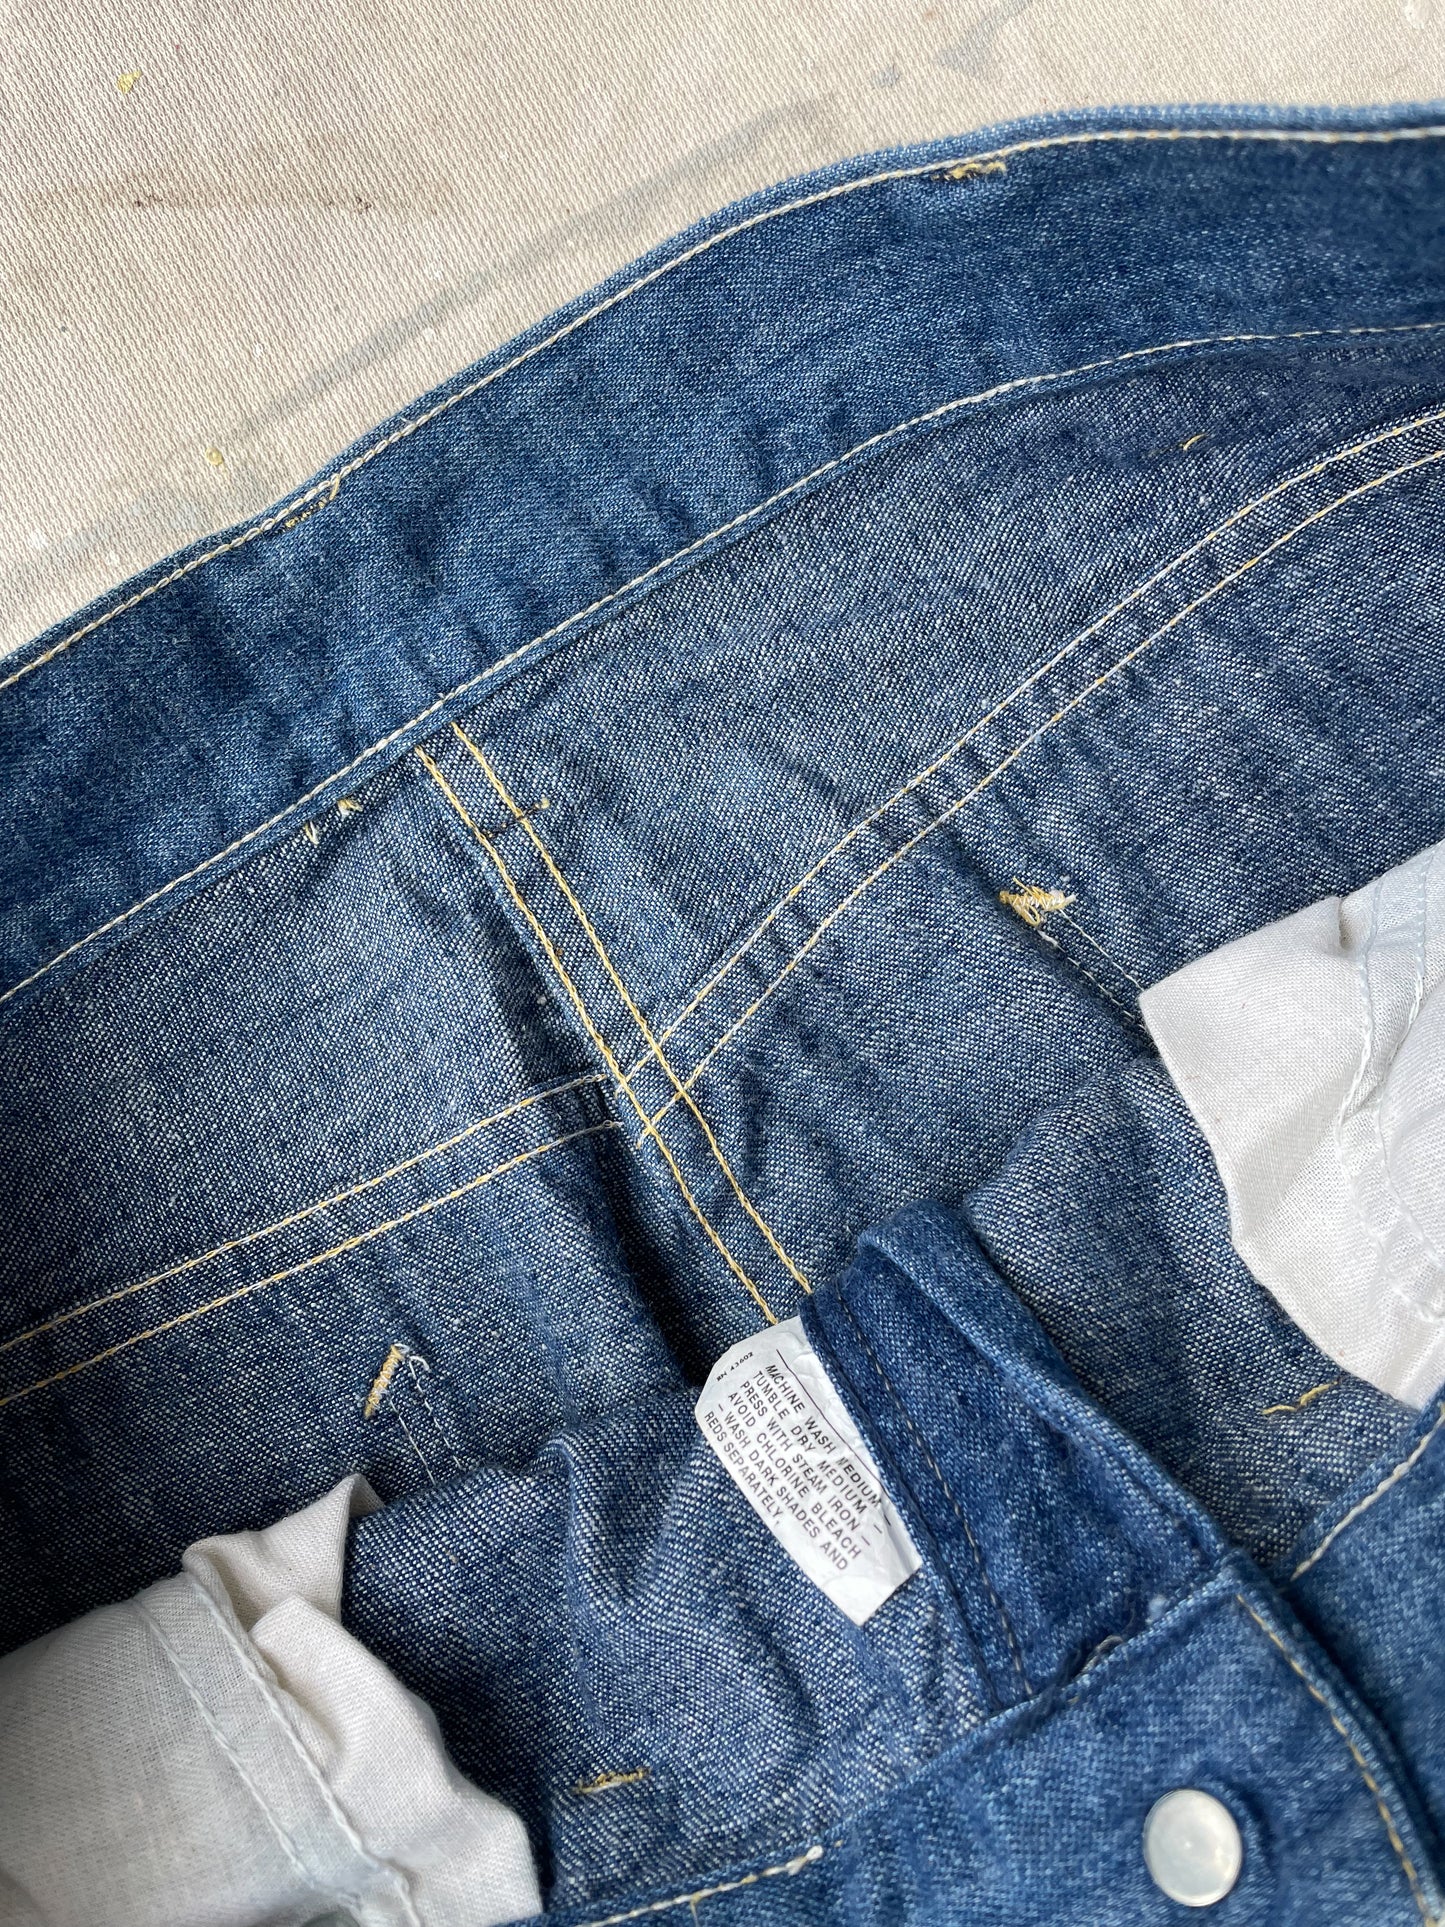 70's Gauchos Flared Jeans—[32x32]